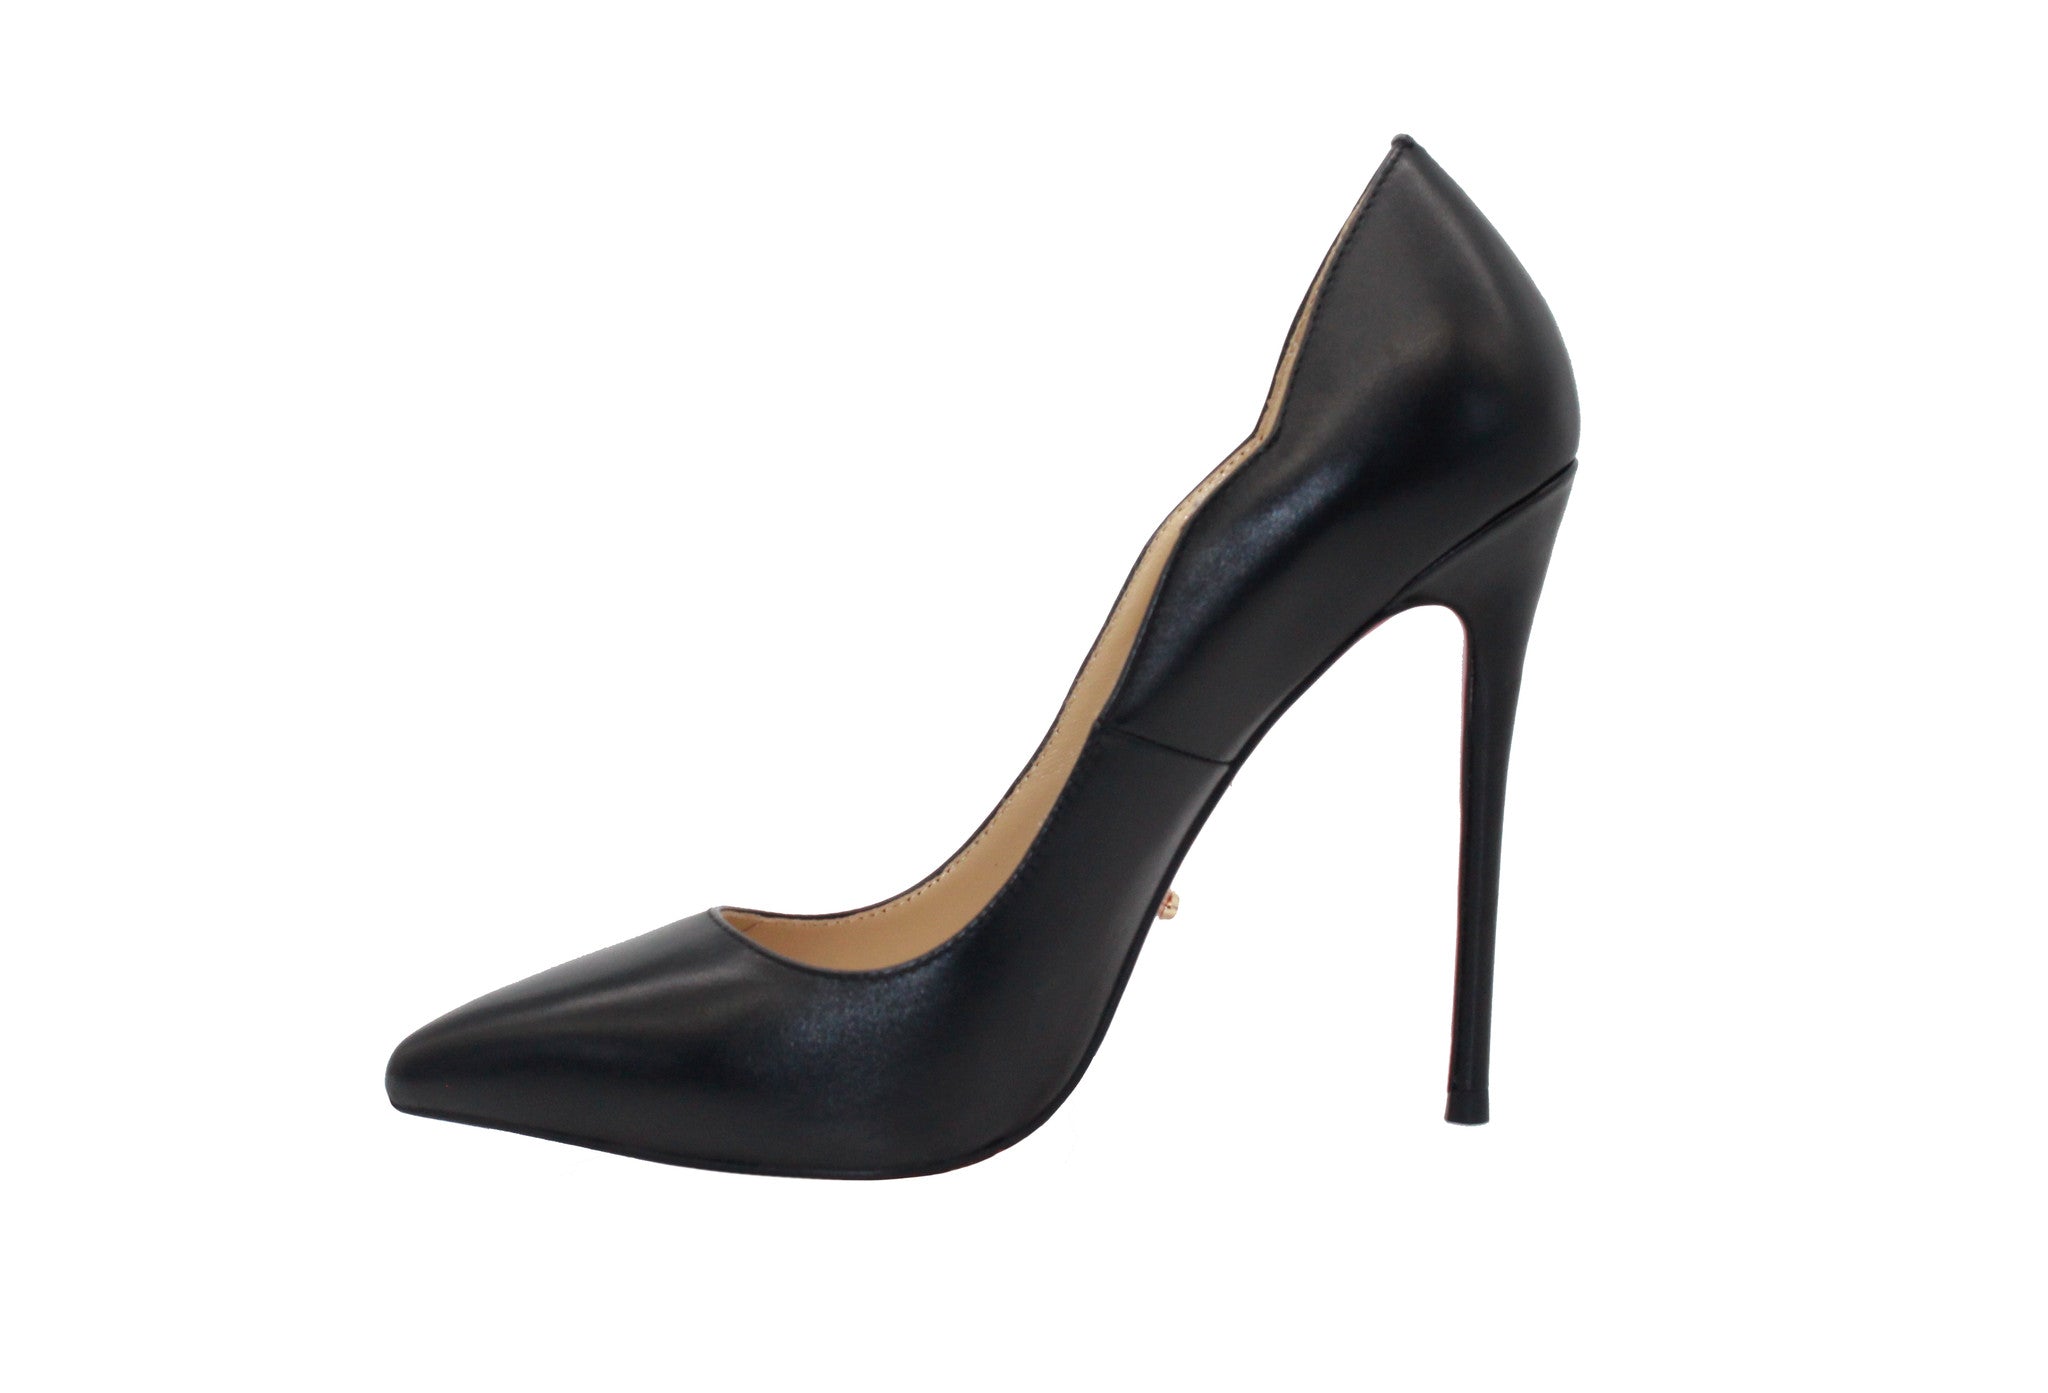 5 inch heels | Red Bottom Heels | Pointed Toe Classic - AVHEELS